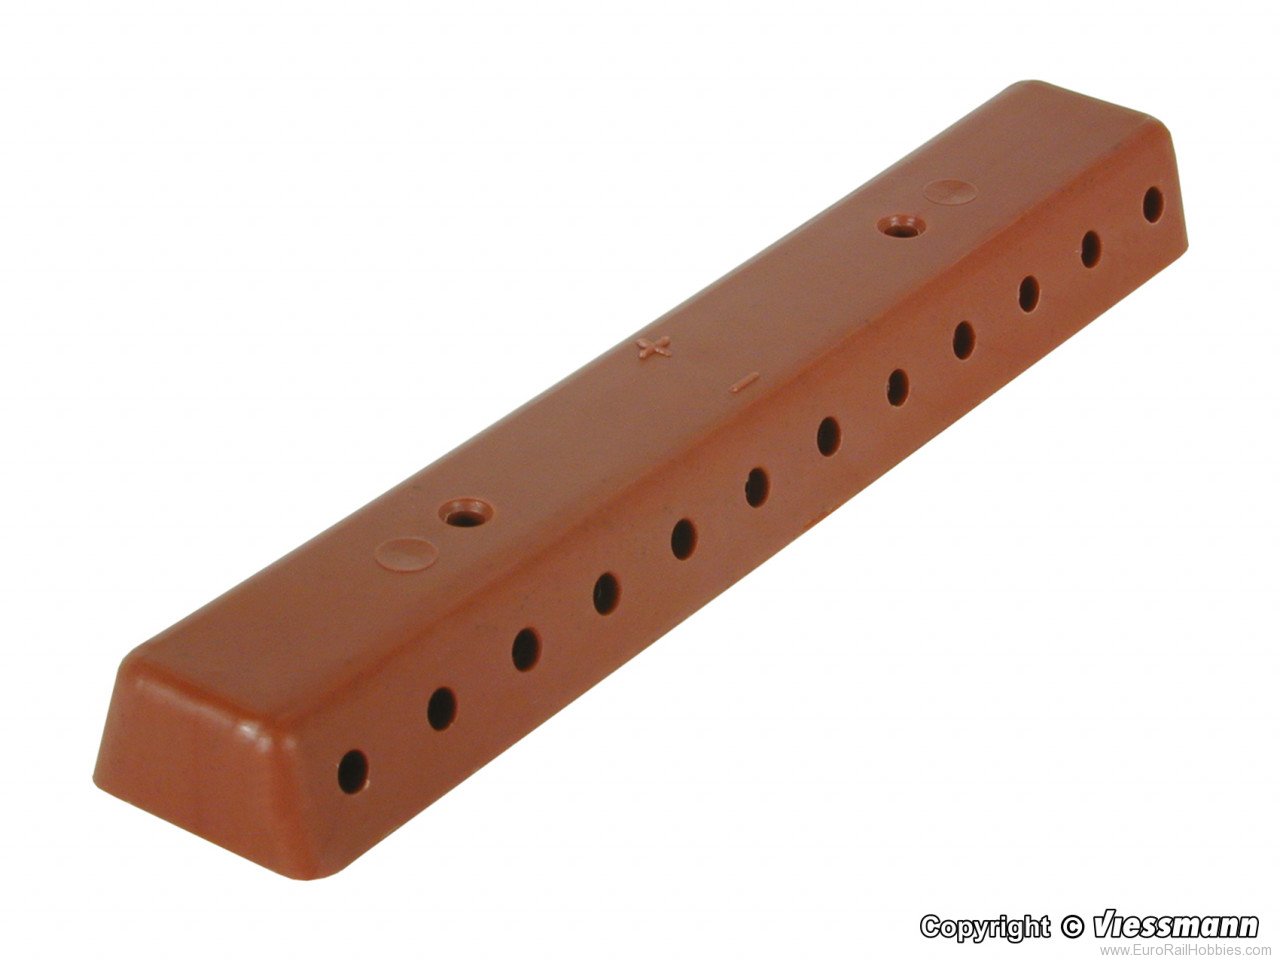 Viessmann 6843 Rail, brown, with screws, 2 pieces